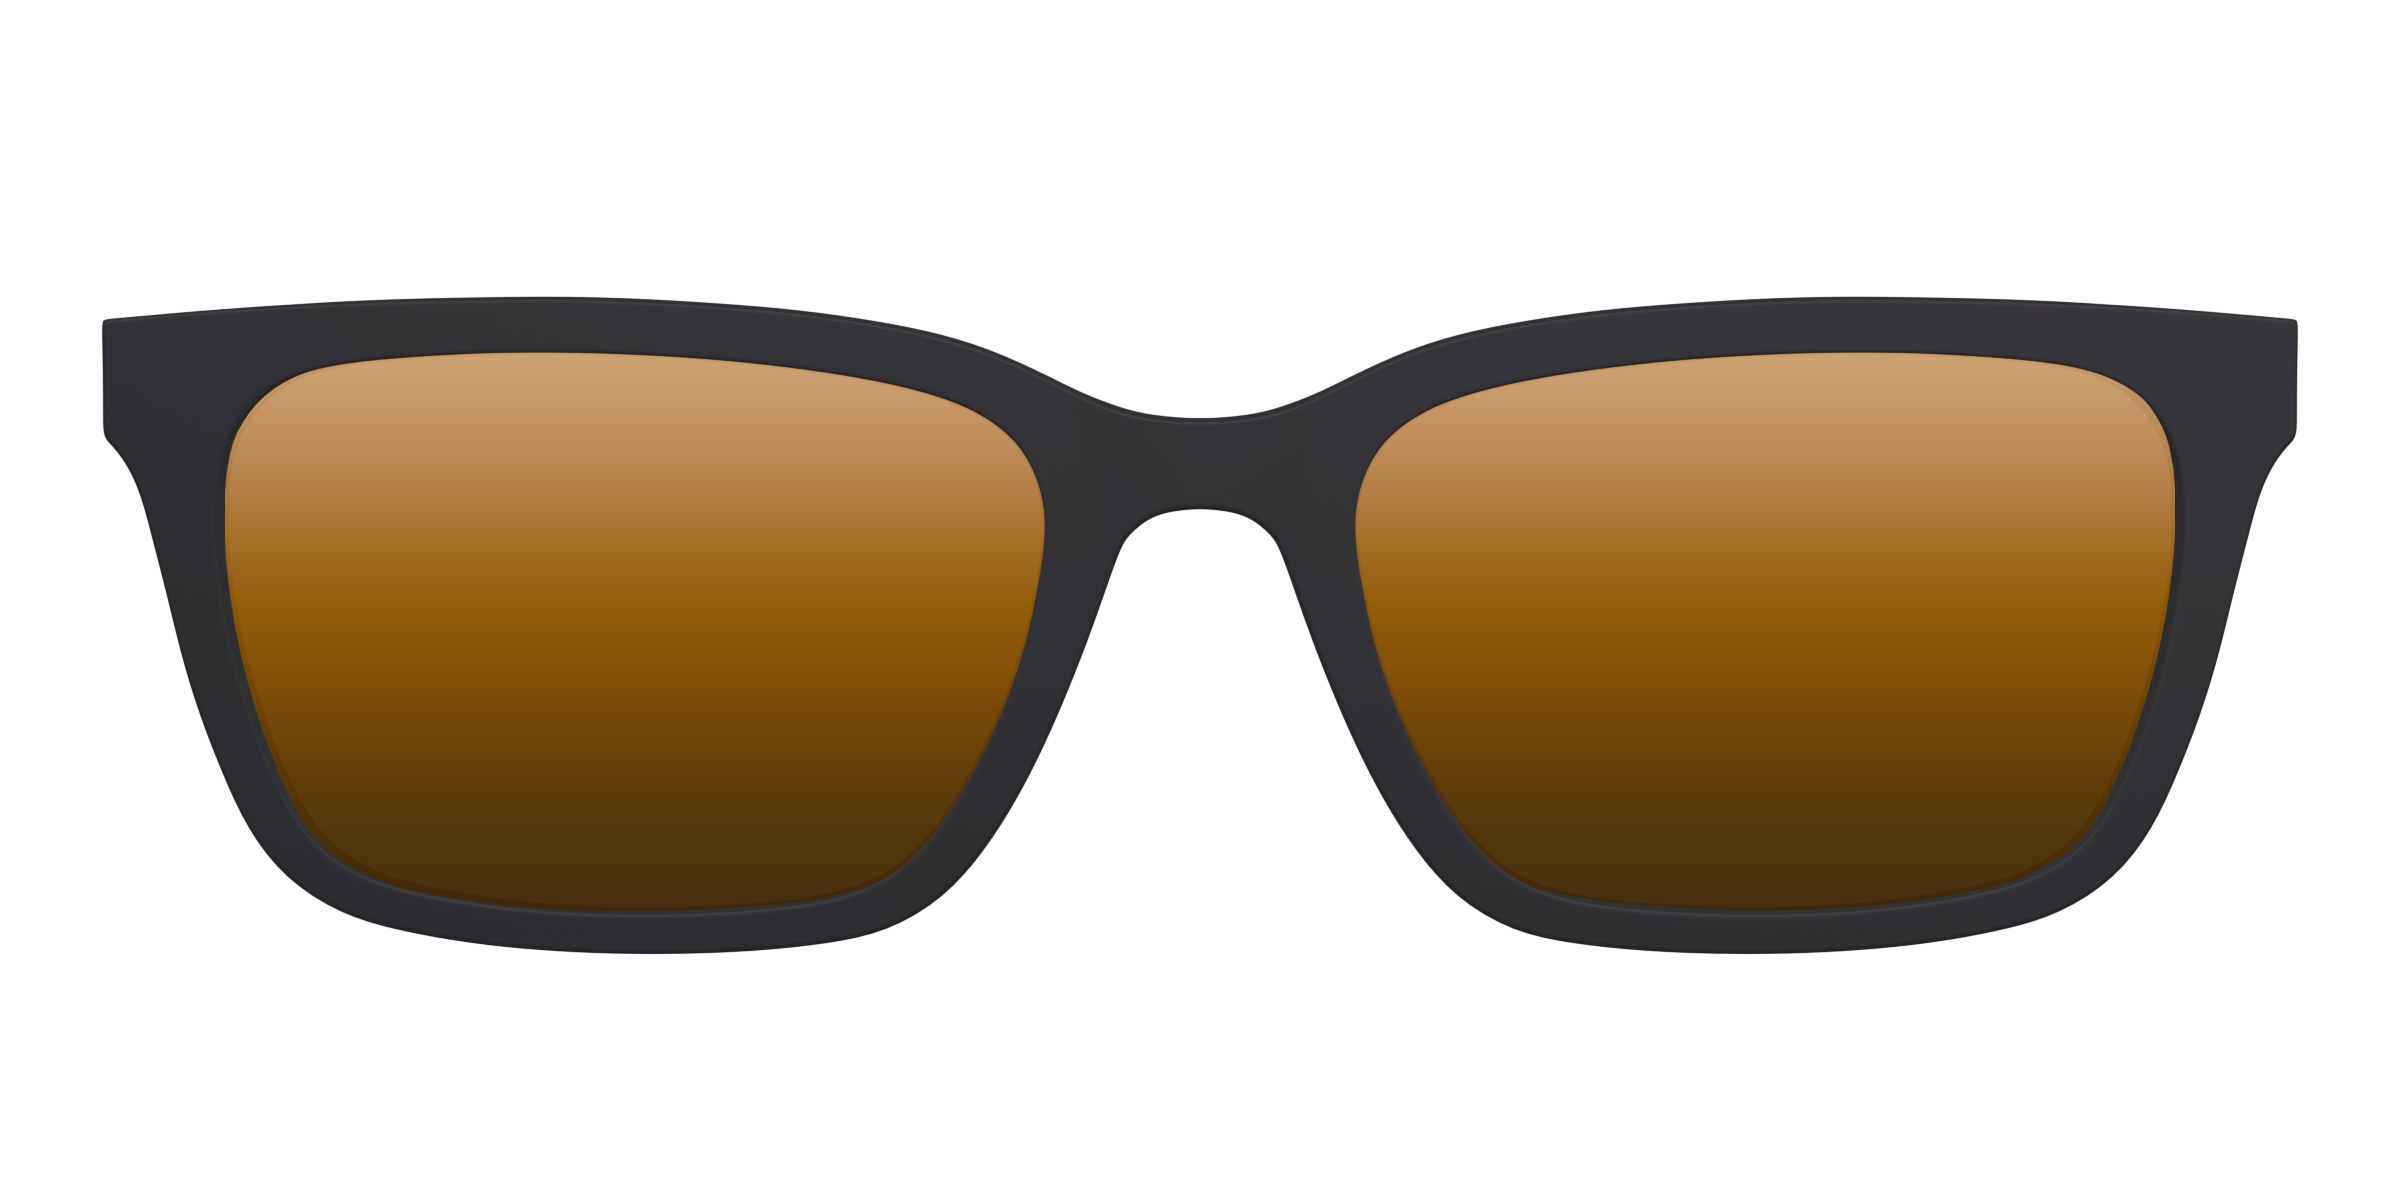 Share more than 250 reflective wayfarer sunglasses